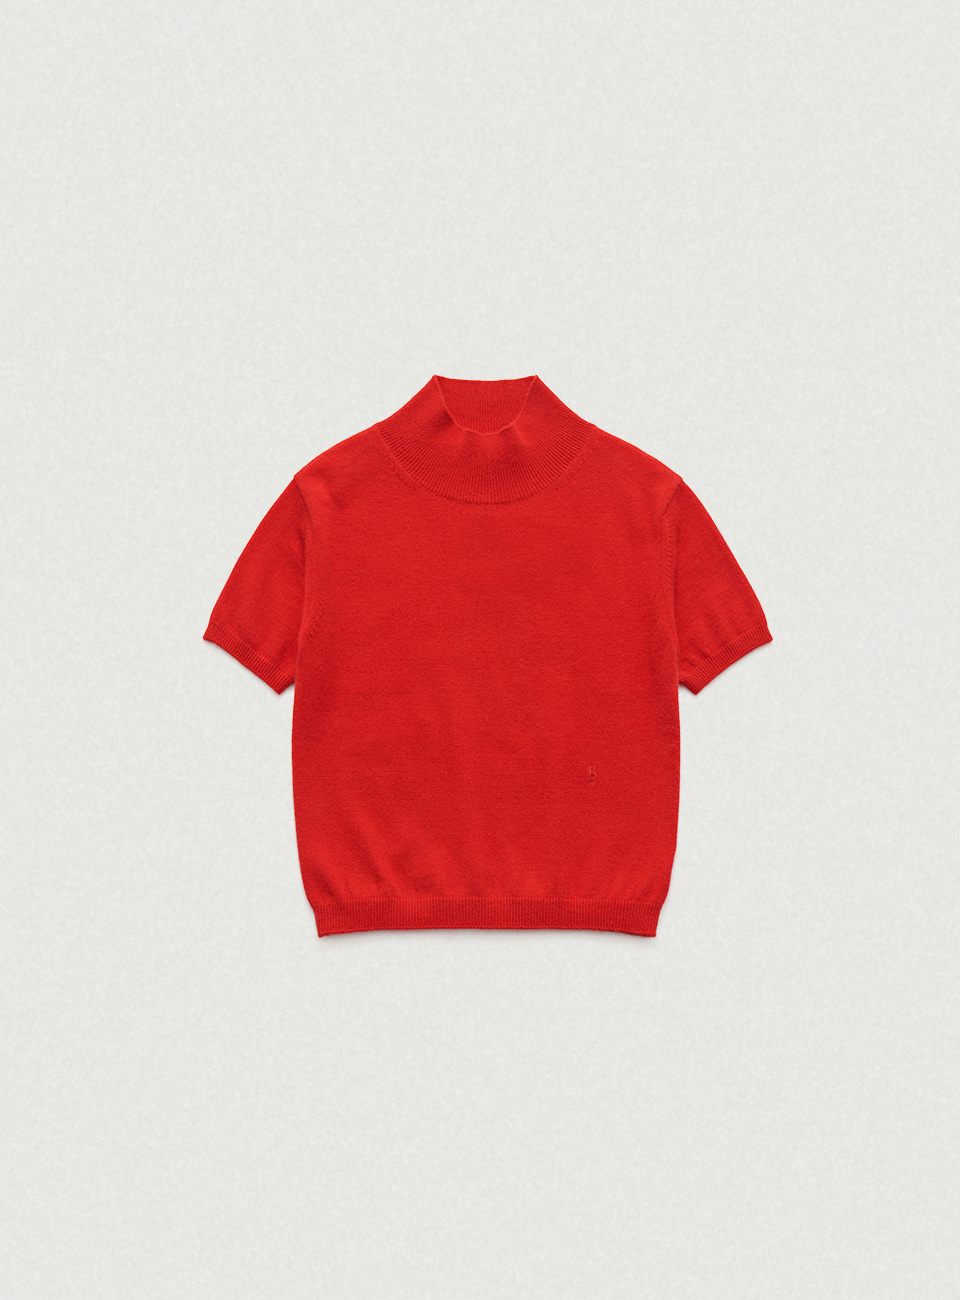 Red Angora Turtleneck Knit Sweater [10/6부터 순차 배송]